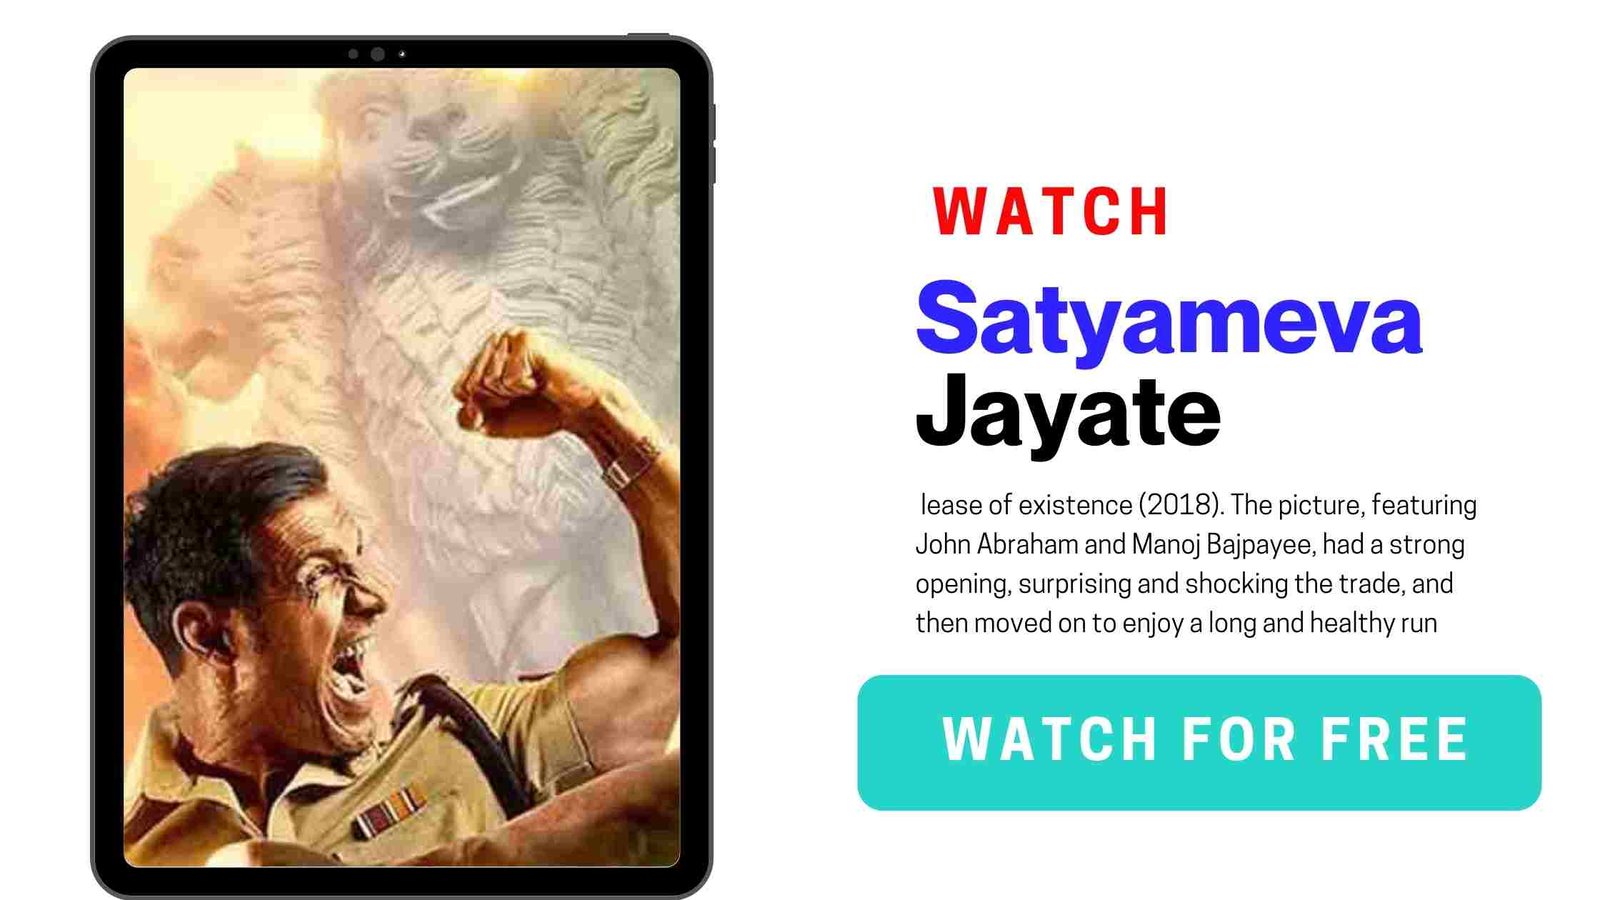 how to watch Satyameva Jayate 2 for free